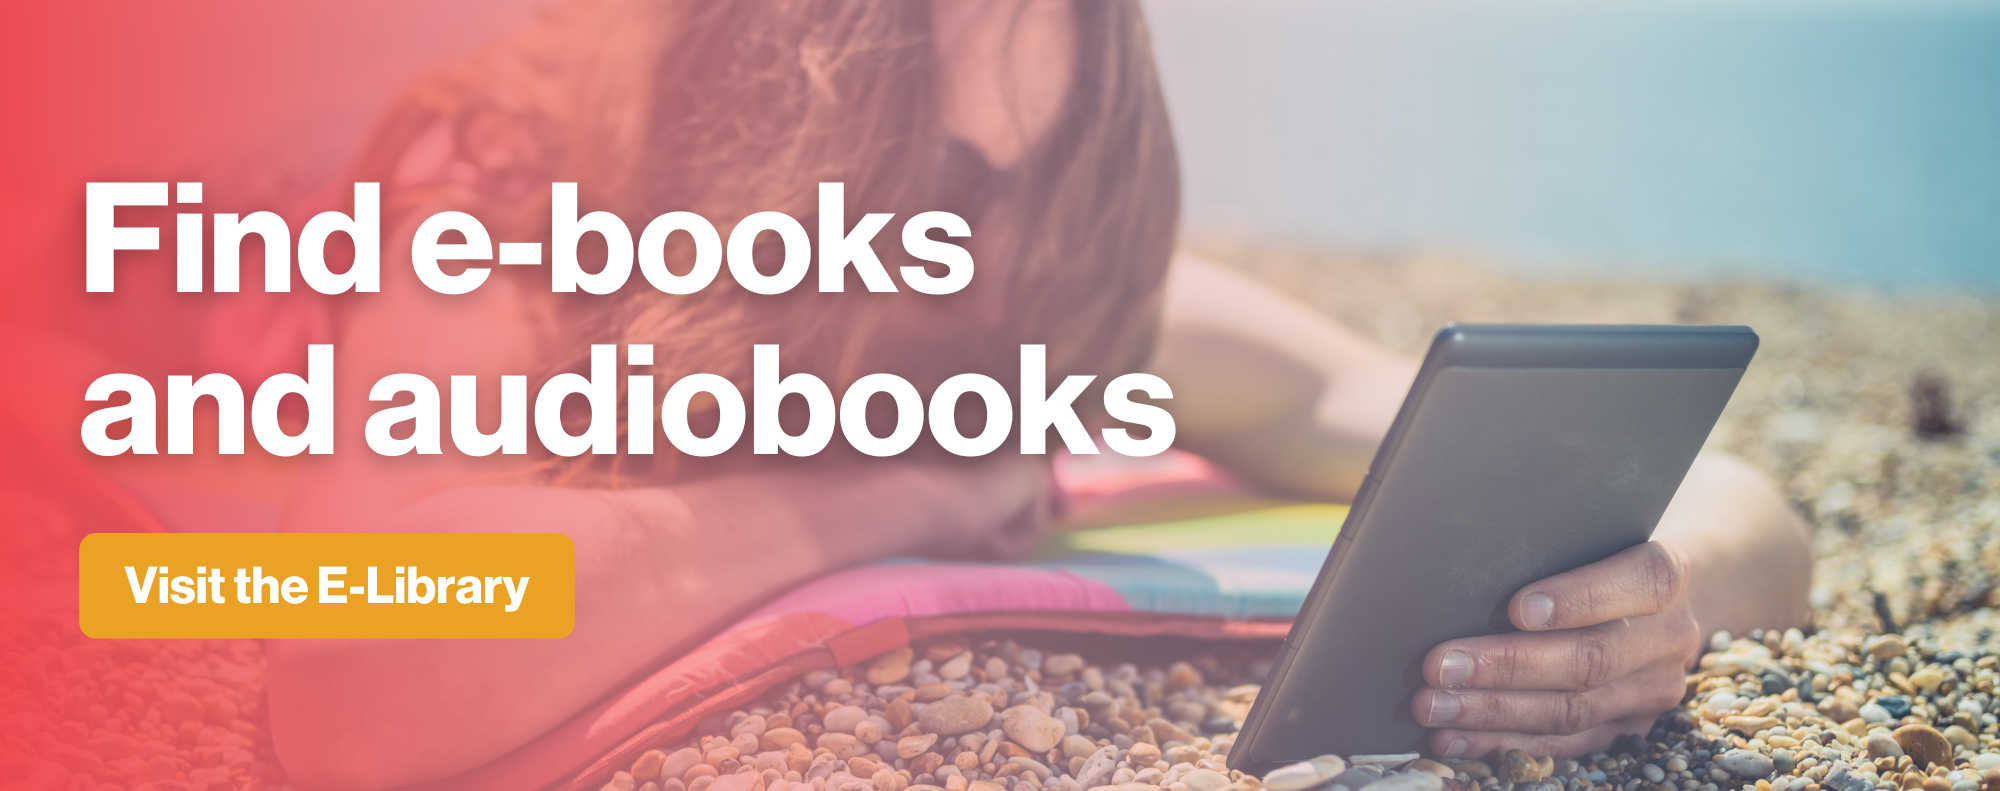 Find e-books and audiobooks